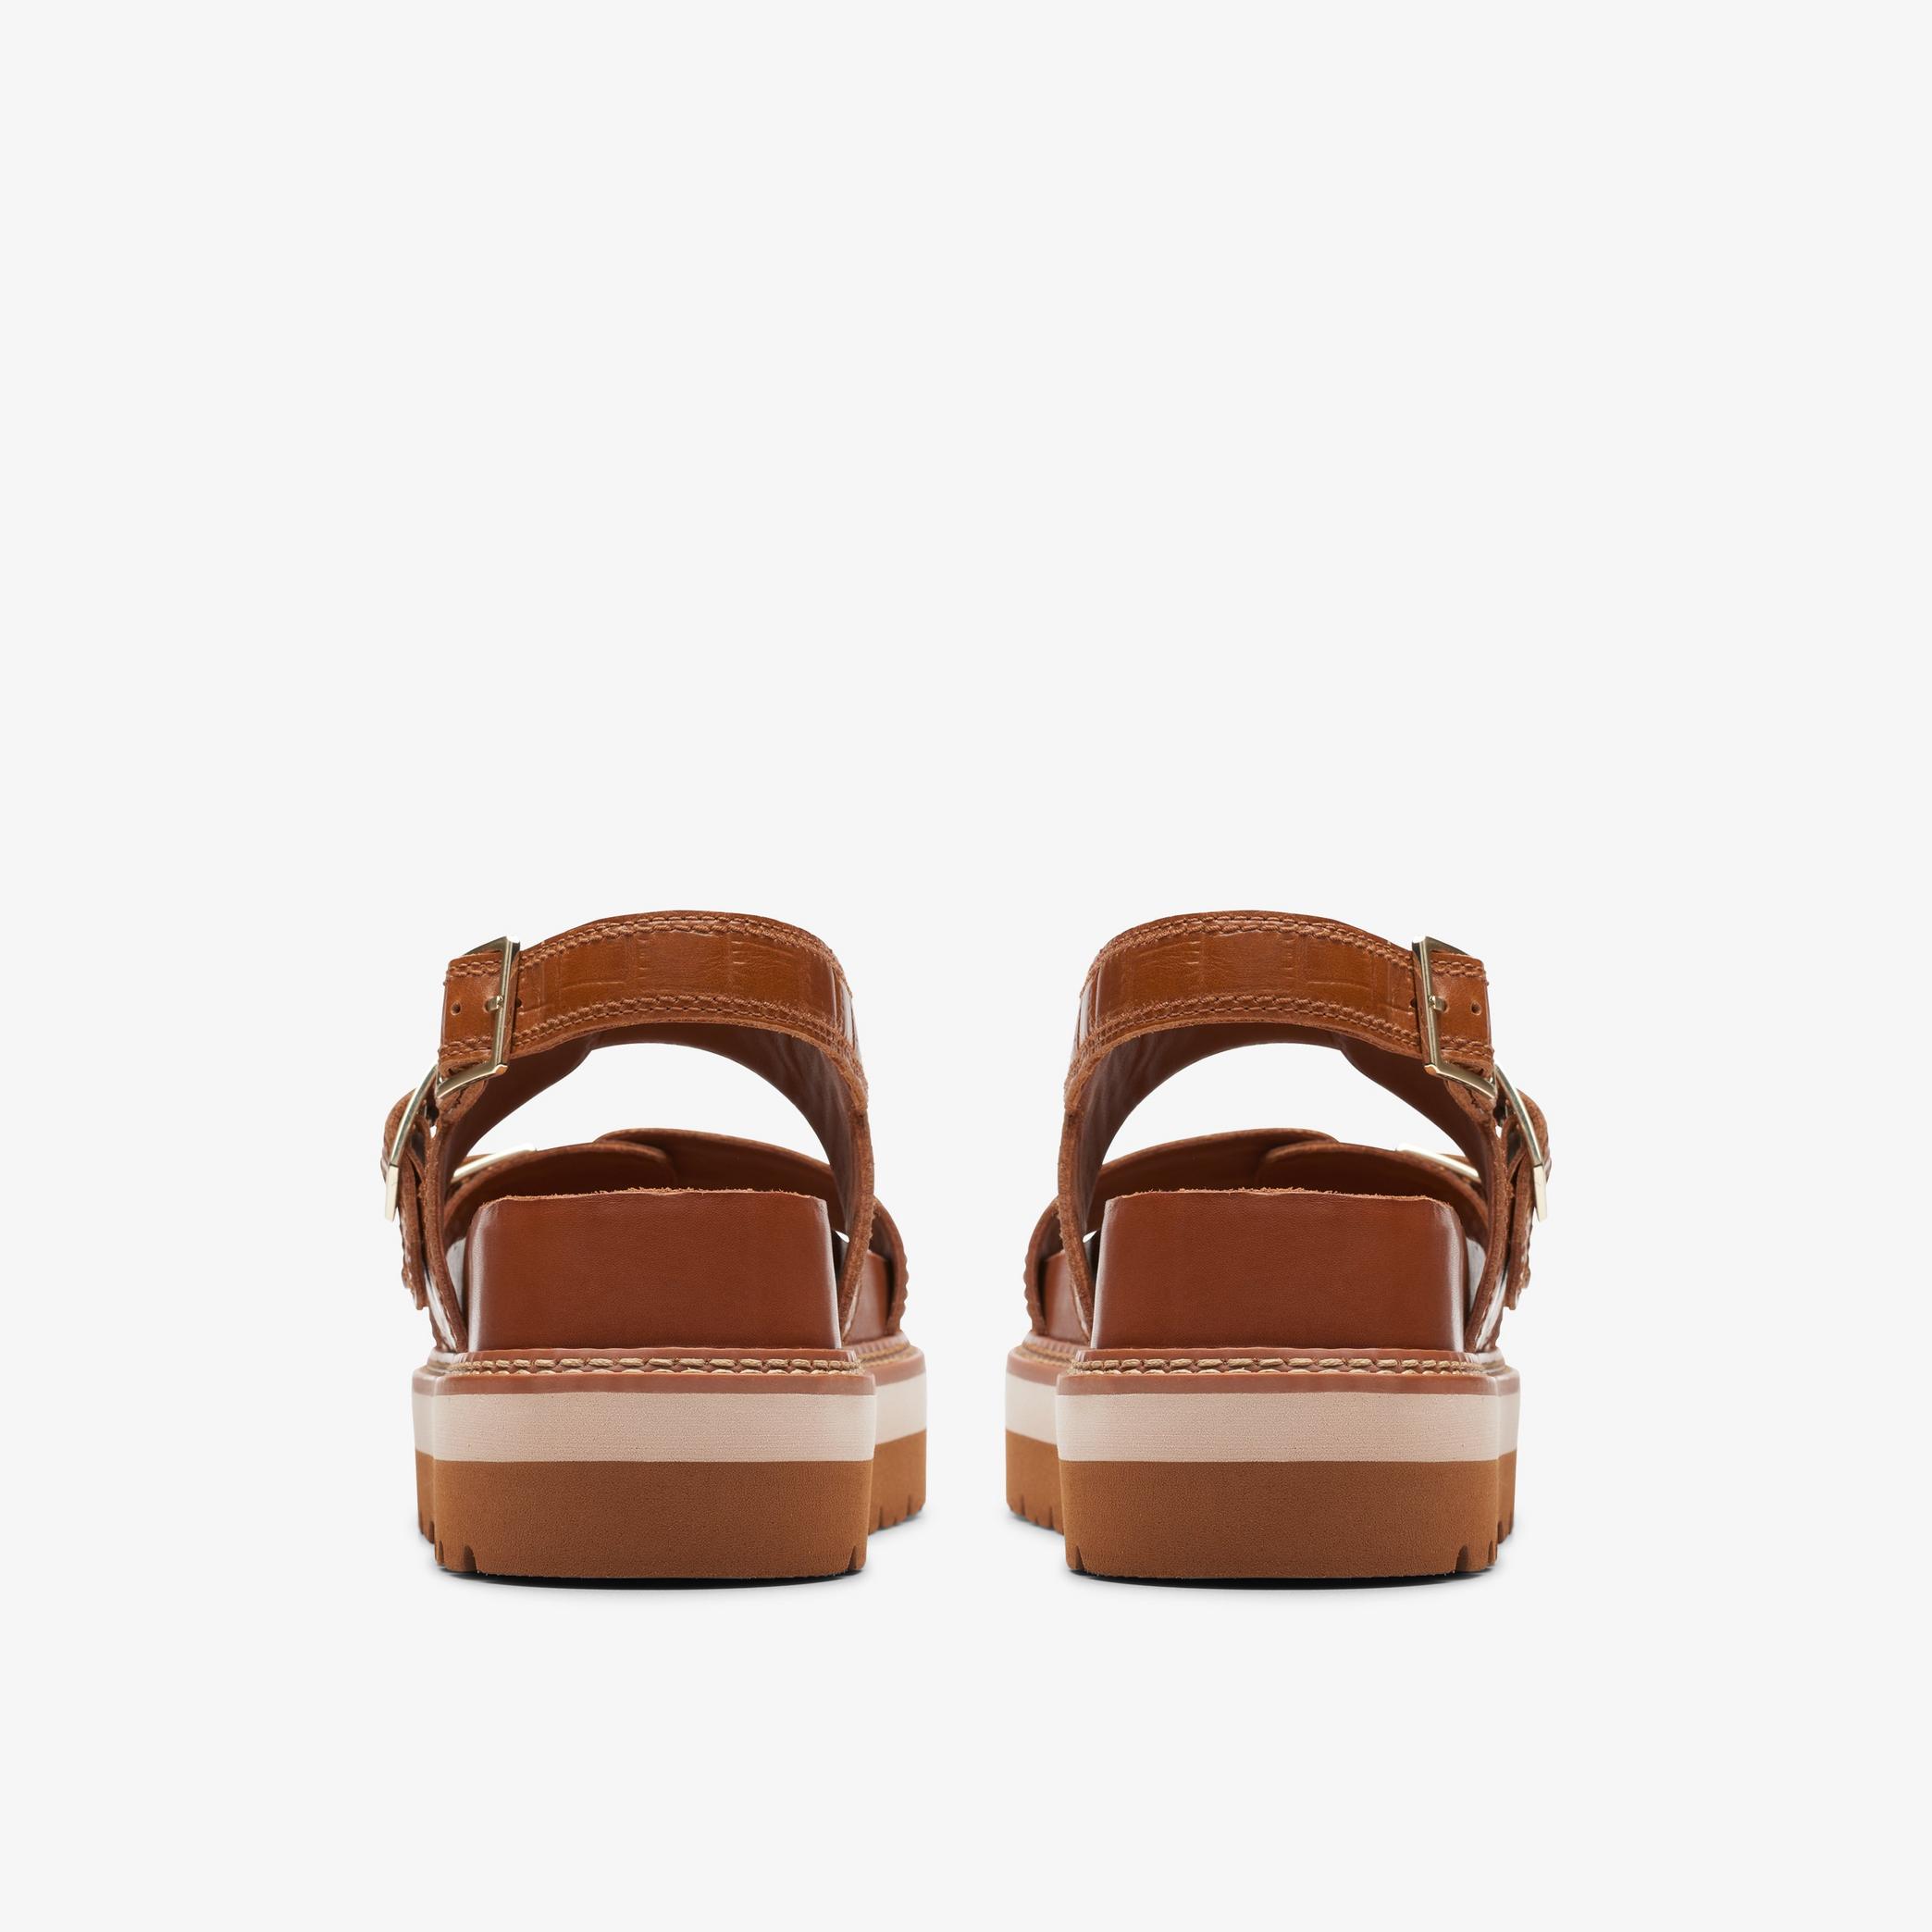 ORIANNA GLIDE Tan Interest Flat Sandals, view 5 of 6